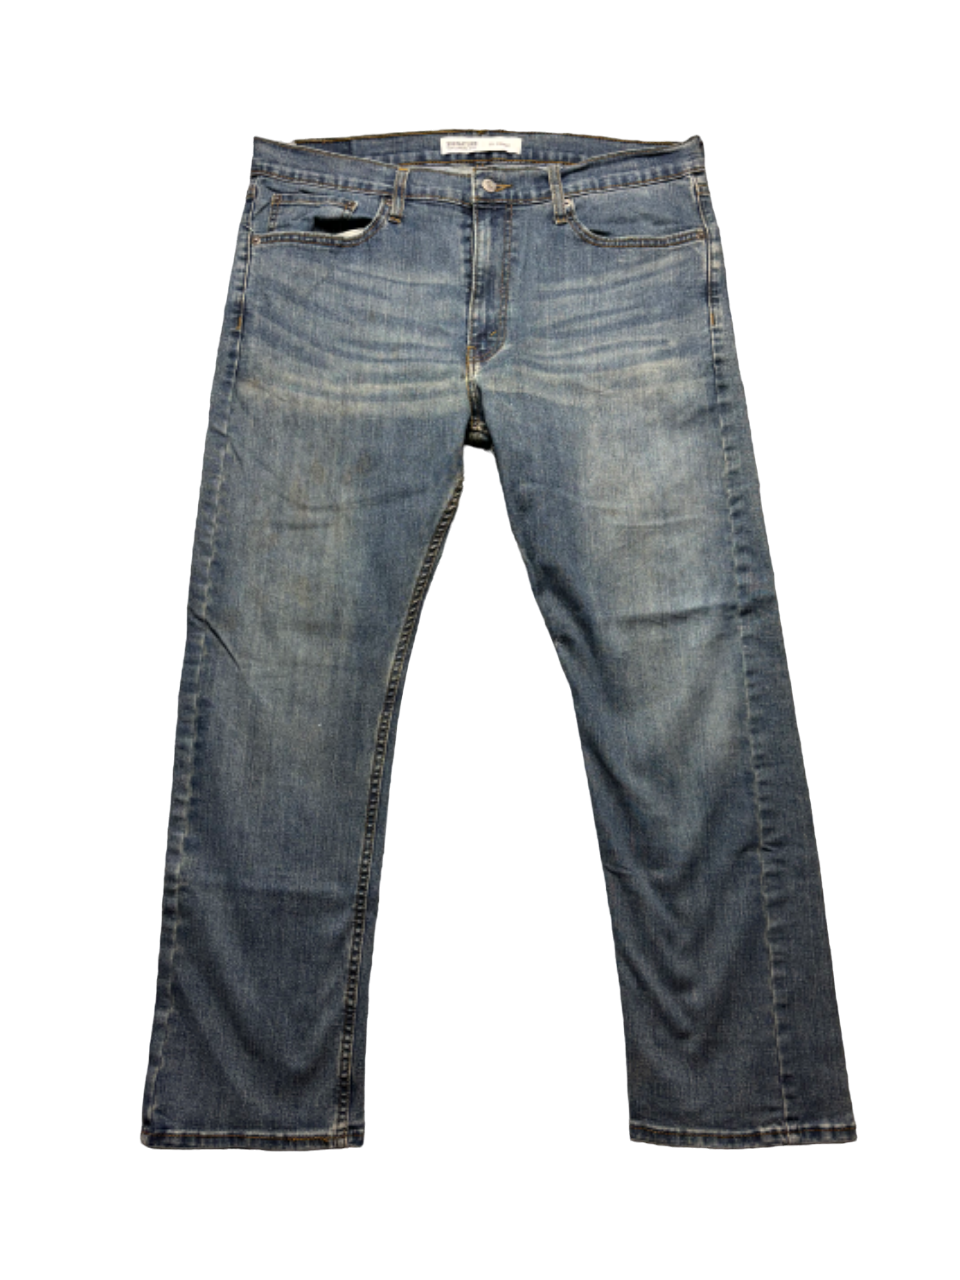 Pantalon Levis Signature S51 Straight retro - Large